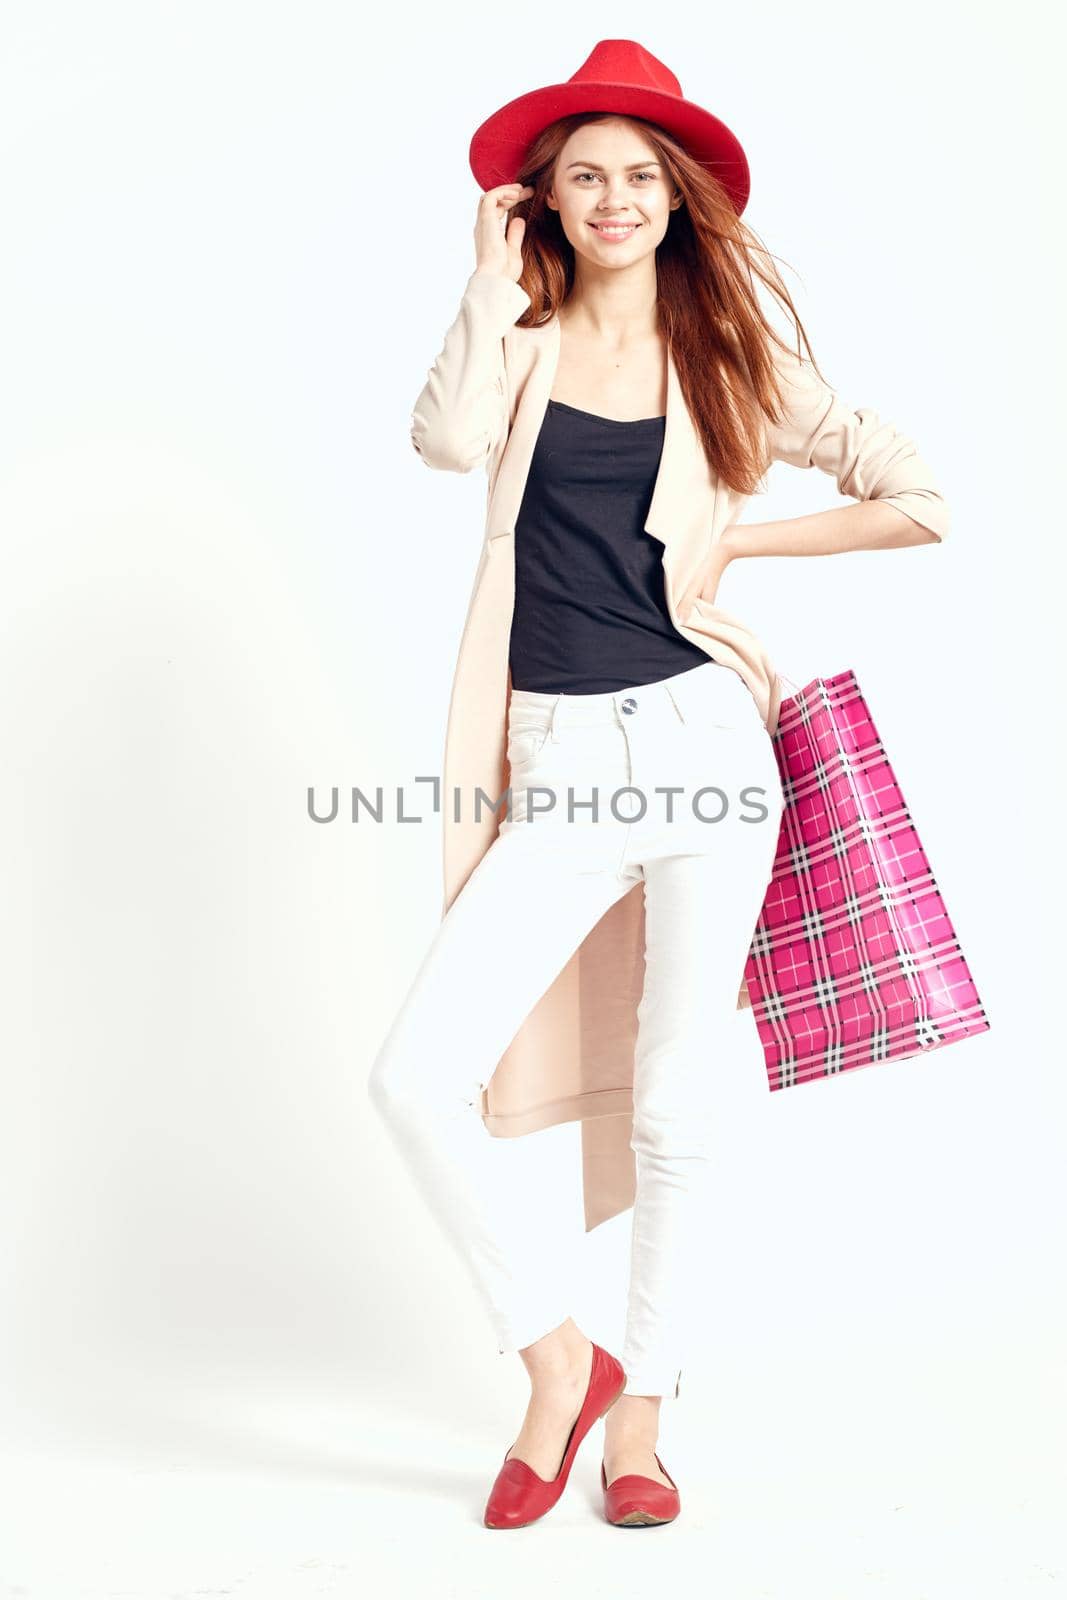 pretty woman wearing a red hat posing shopping fun studio model by Vichizh